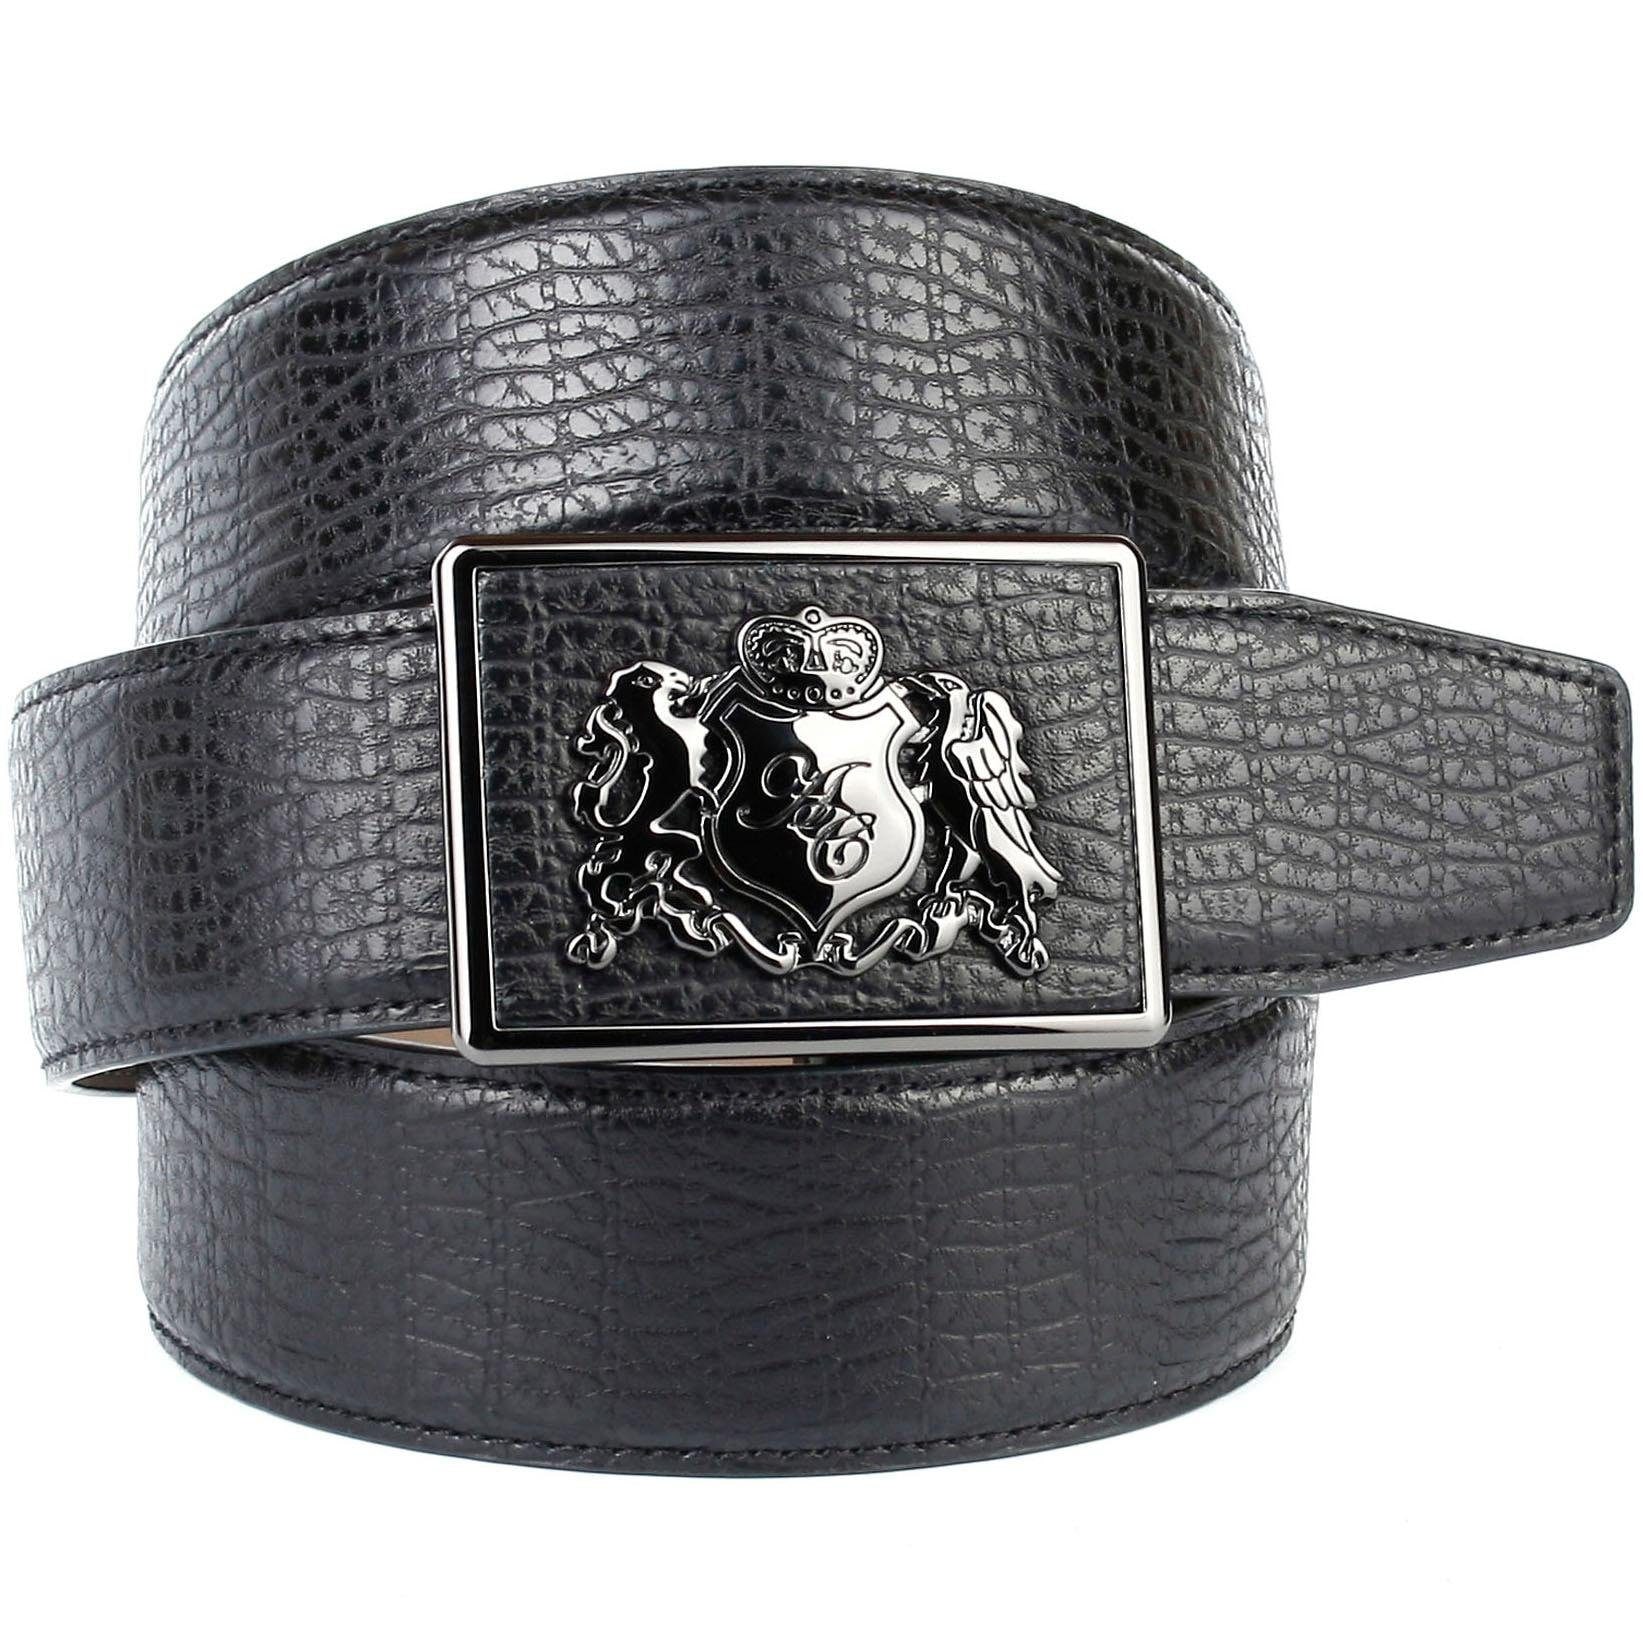 Anthoni Crown Ledergürtel mit Anthoni Crown Wappen Lochmuster am Rand